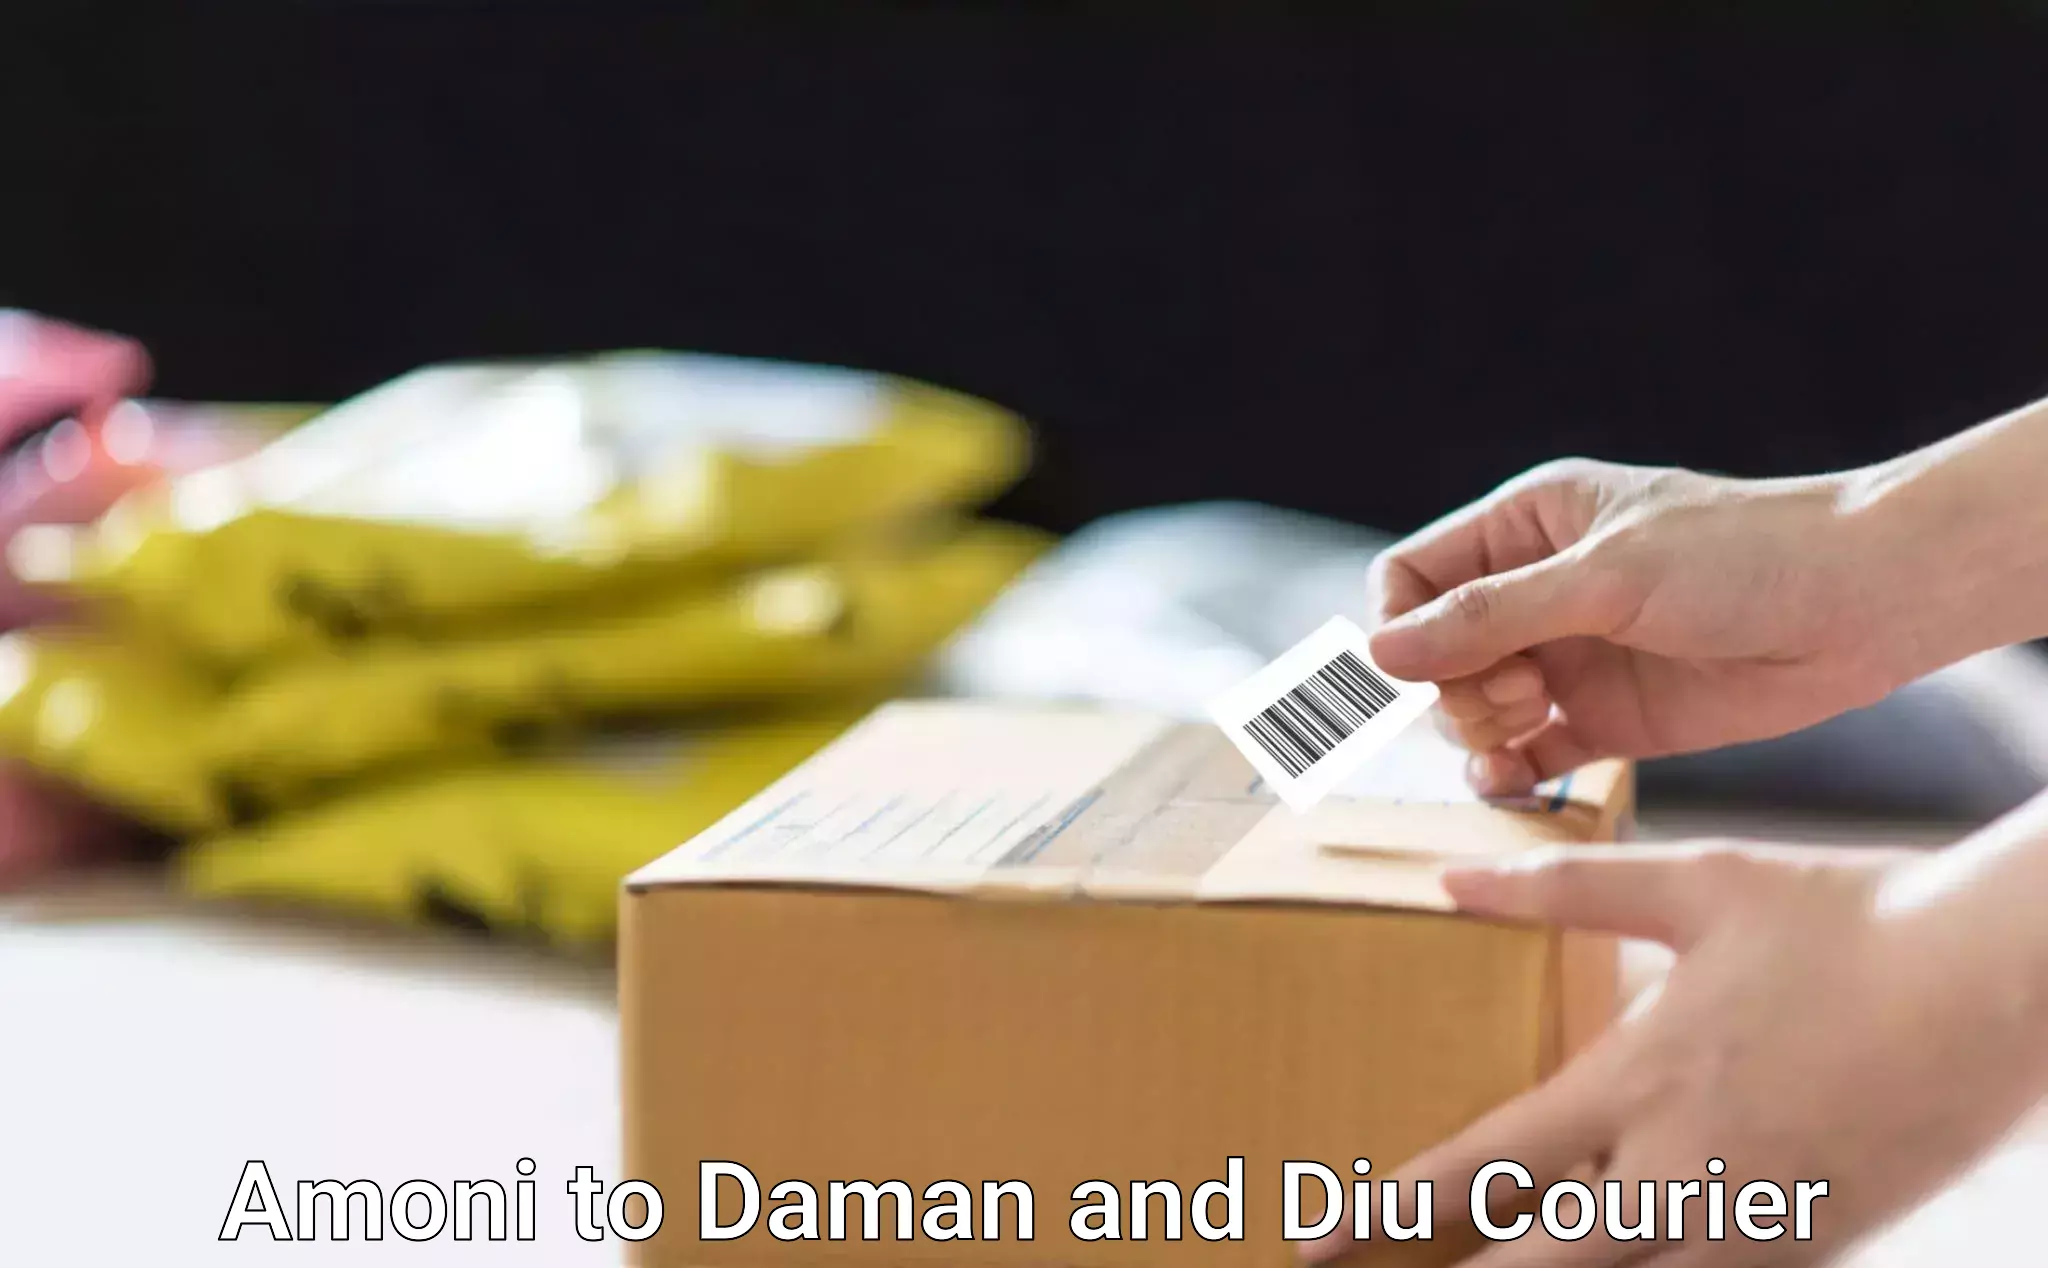 Courier service comparison Amoni to Daman and Diu